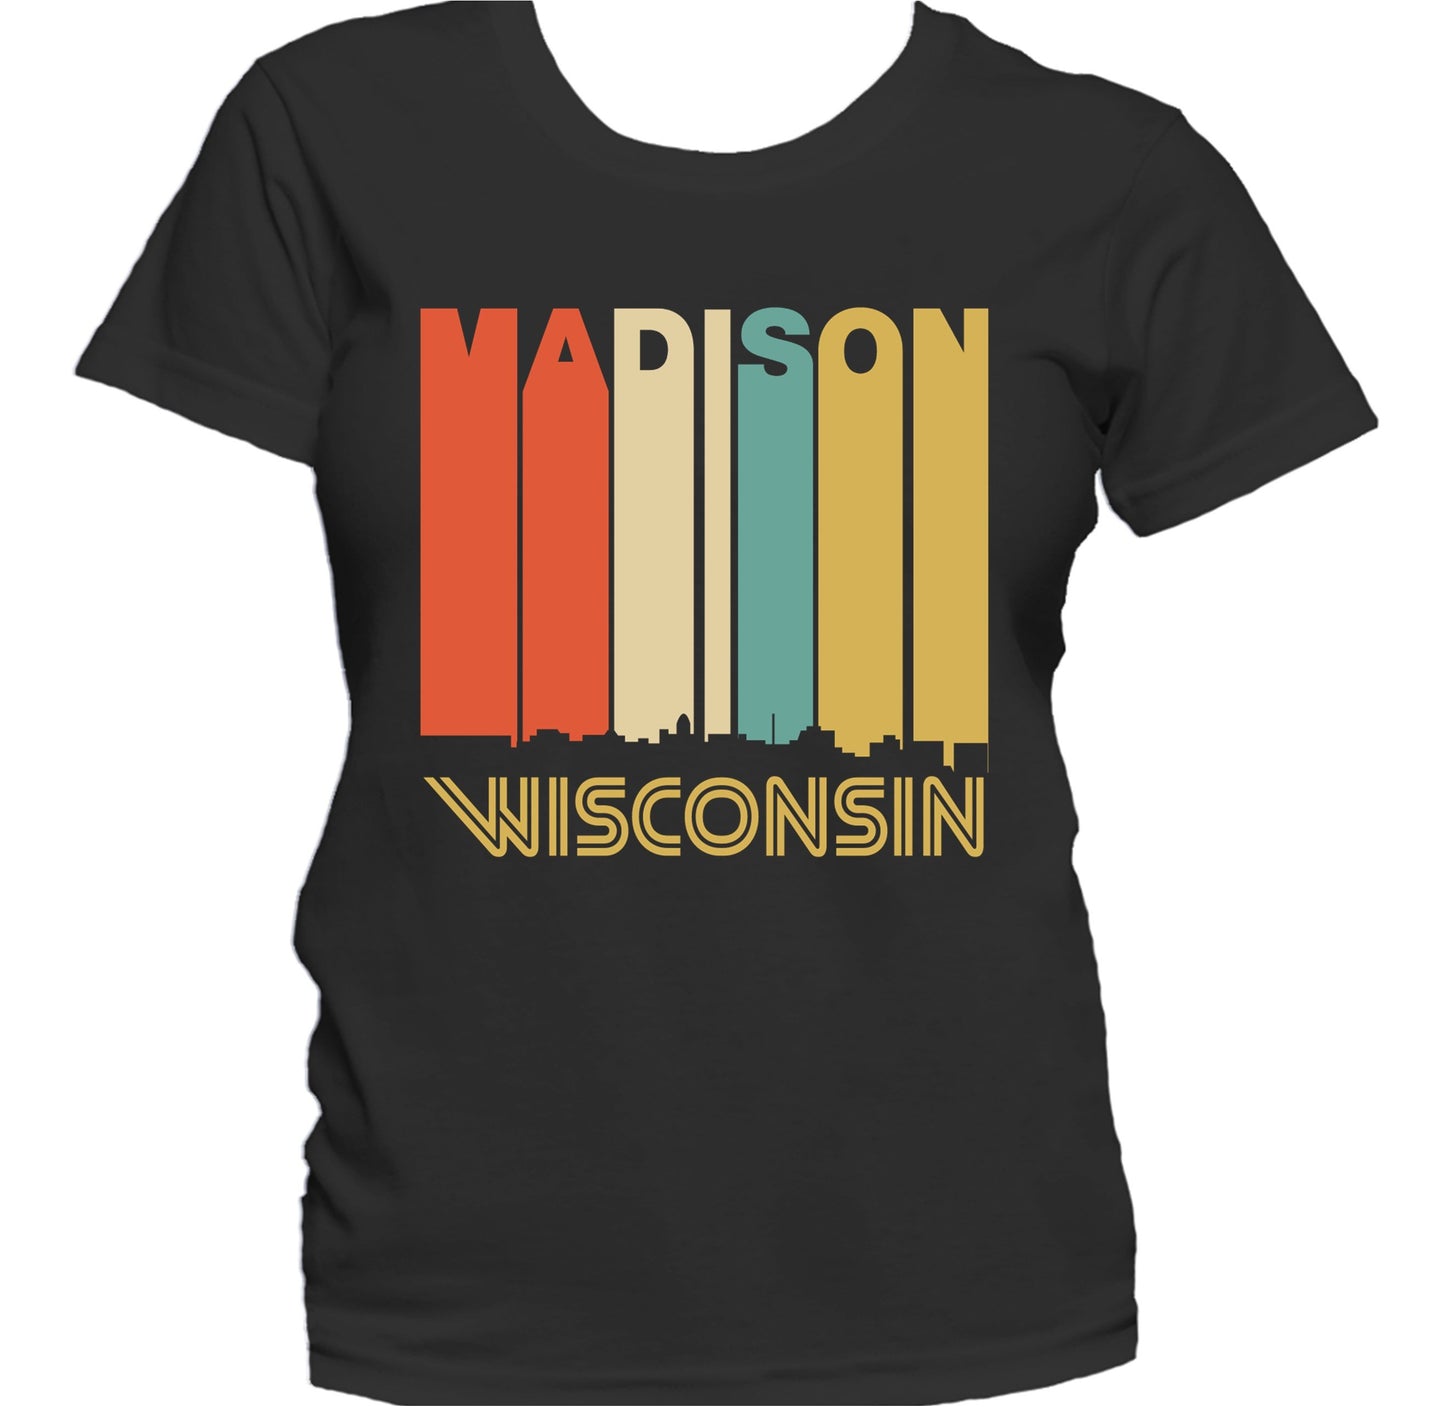 Retro 1970's Style Madison Wisconsin Skyline Women's T-Shirt